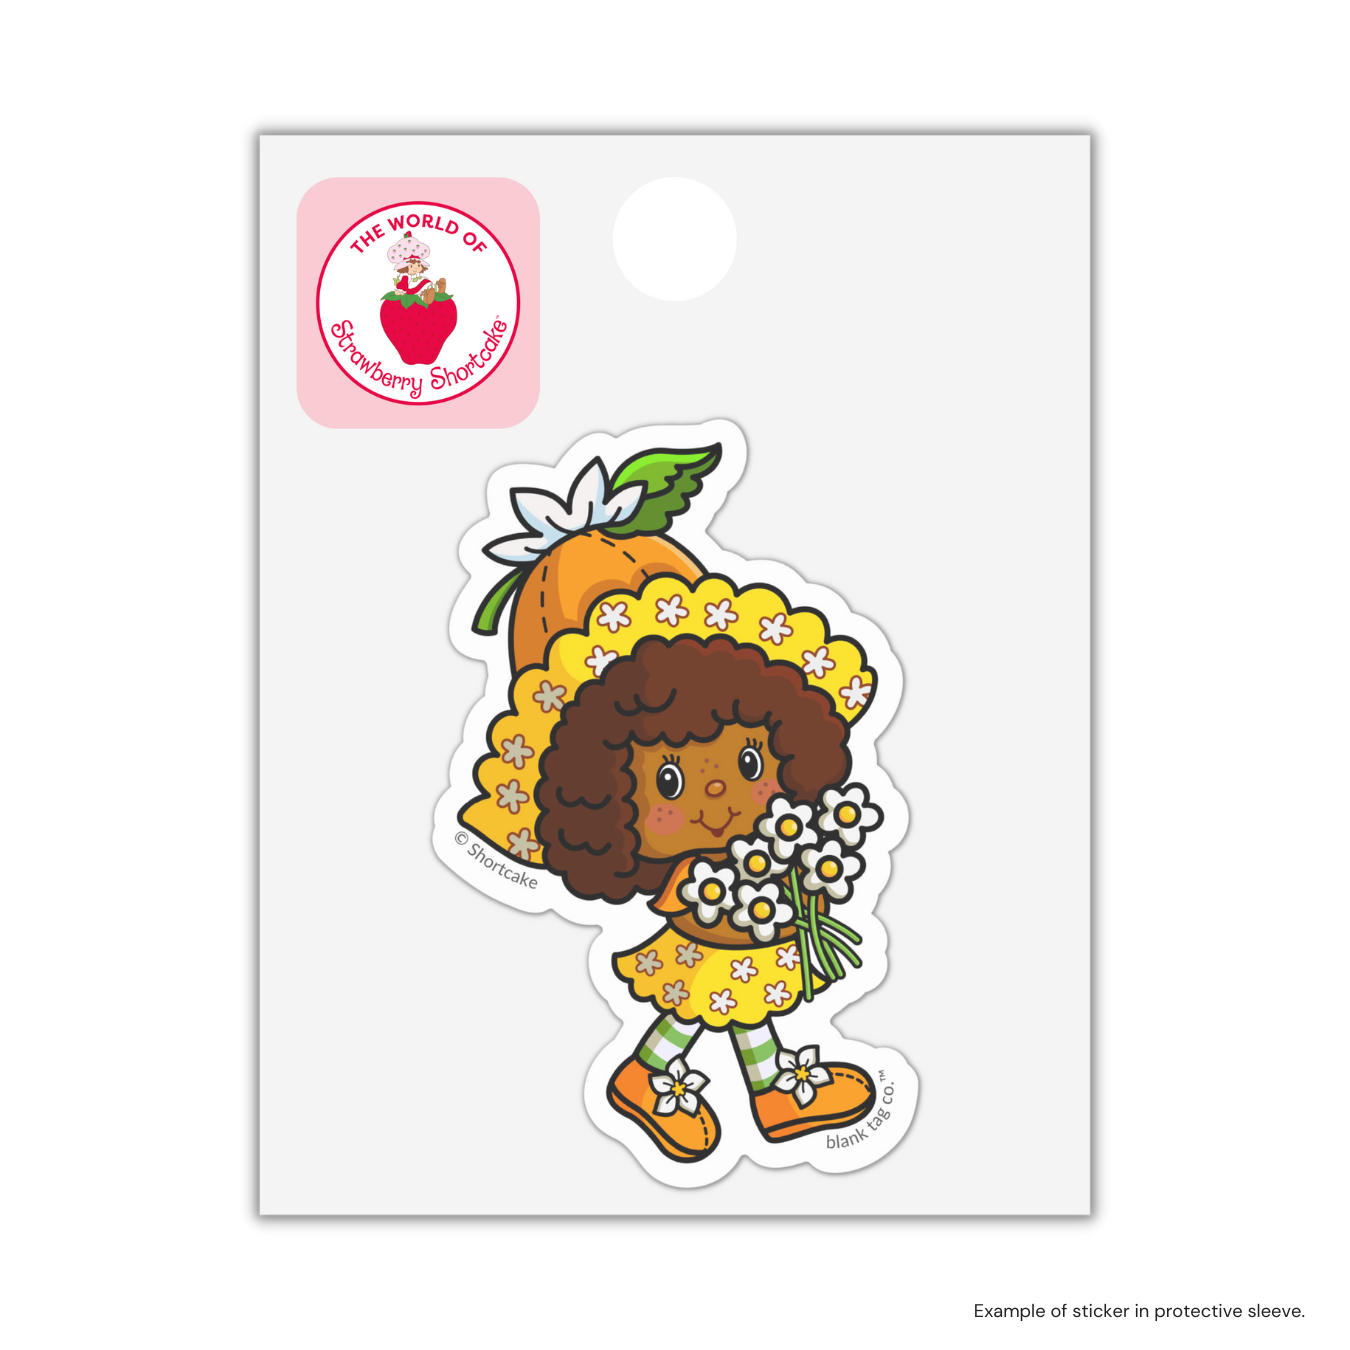 The Orange Blossom Sticker